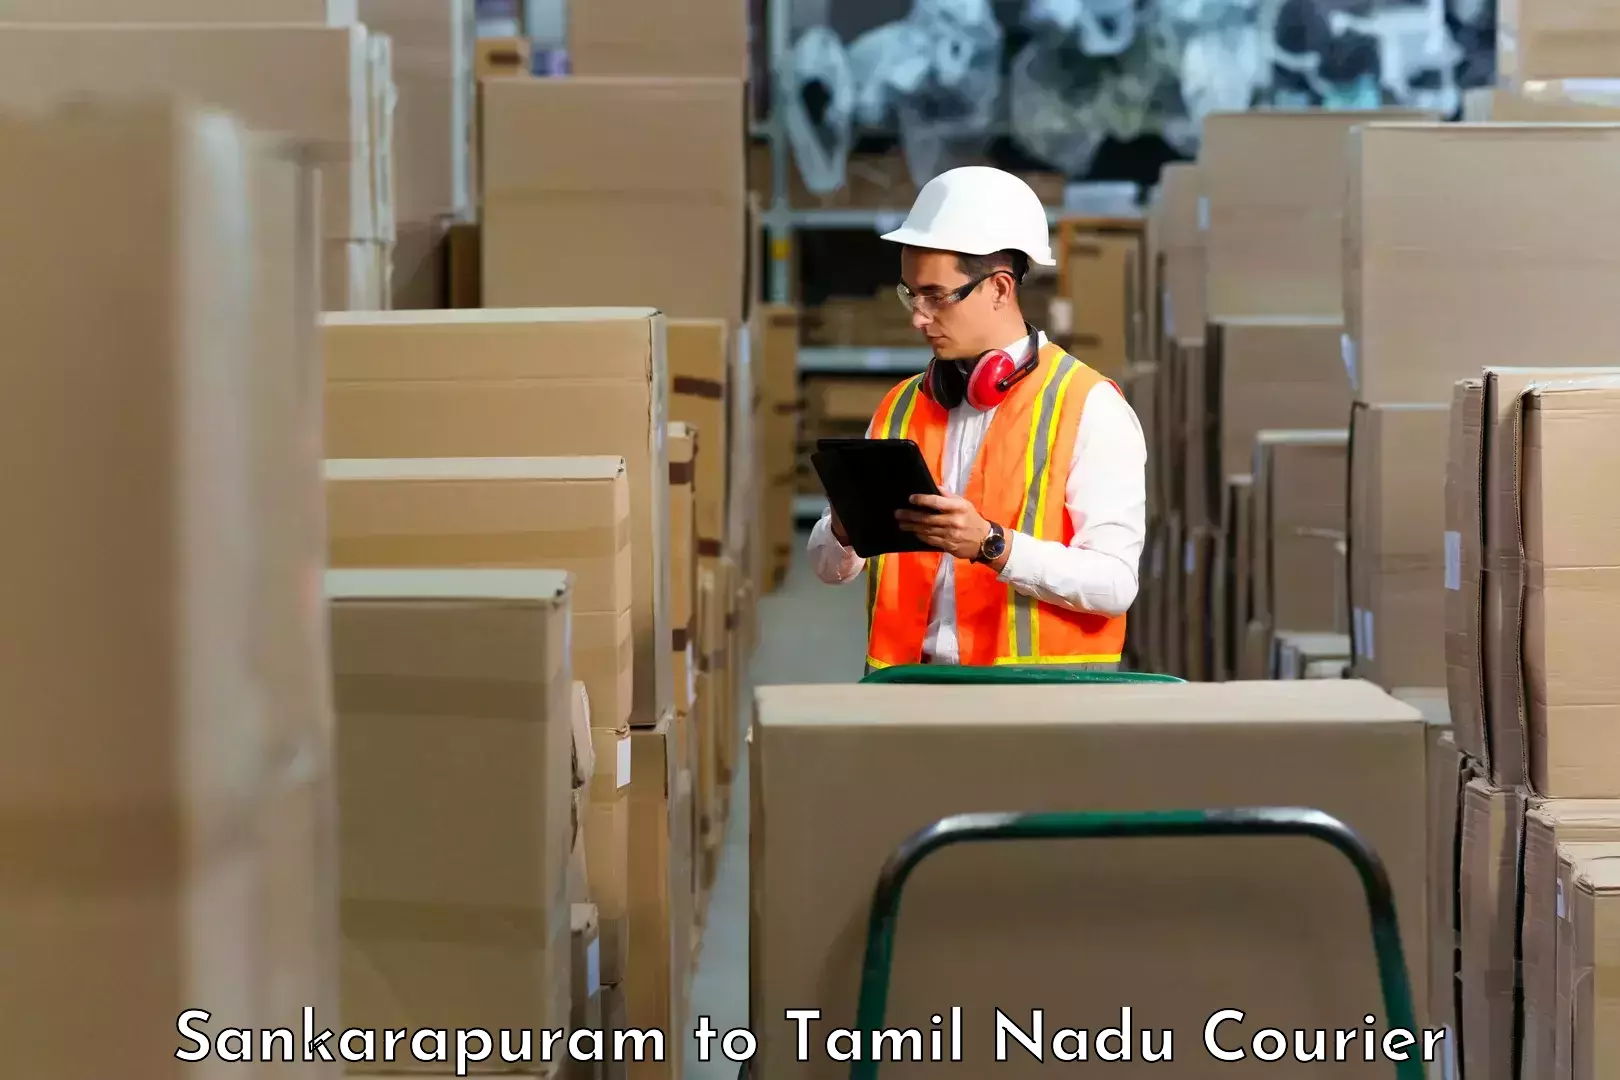 Next-day delivery options Sankarapuram to Melmaruvathur